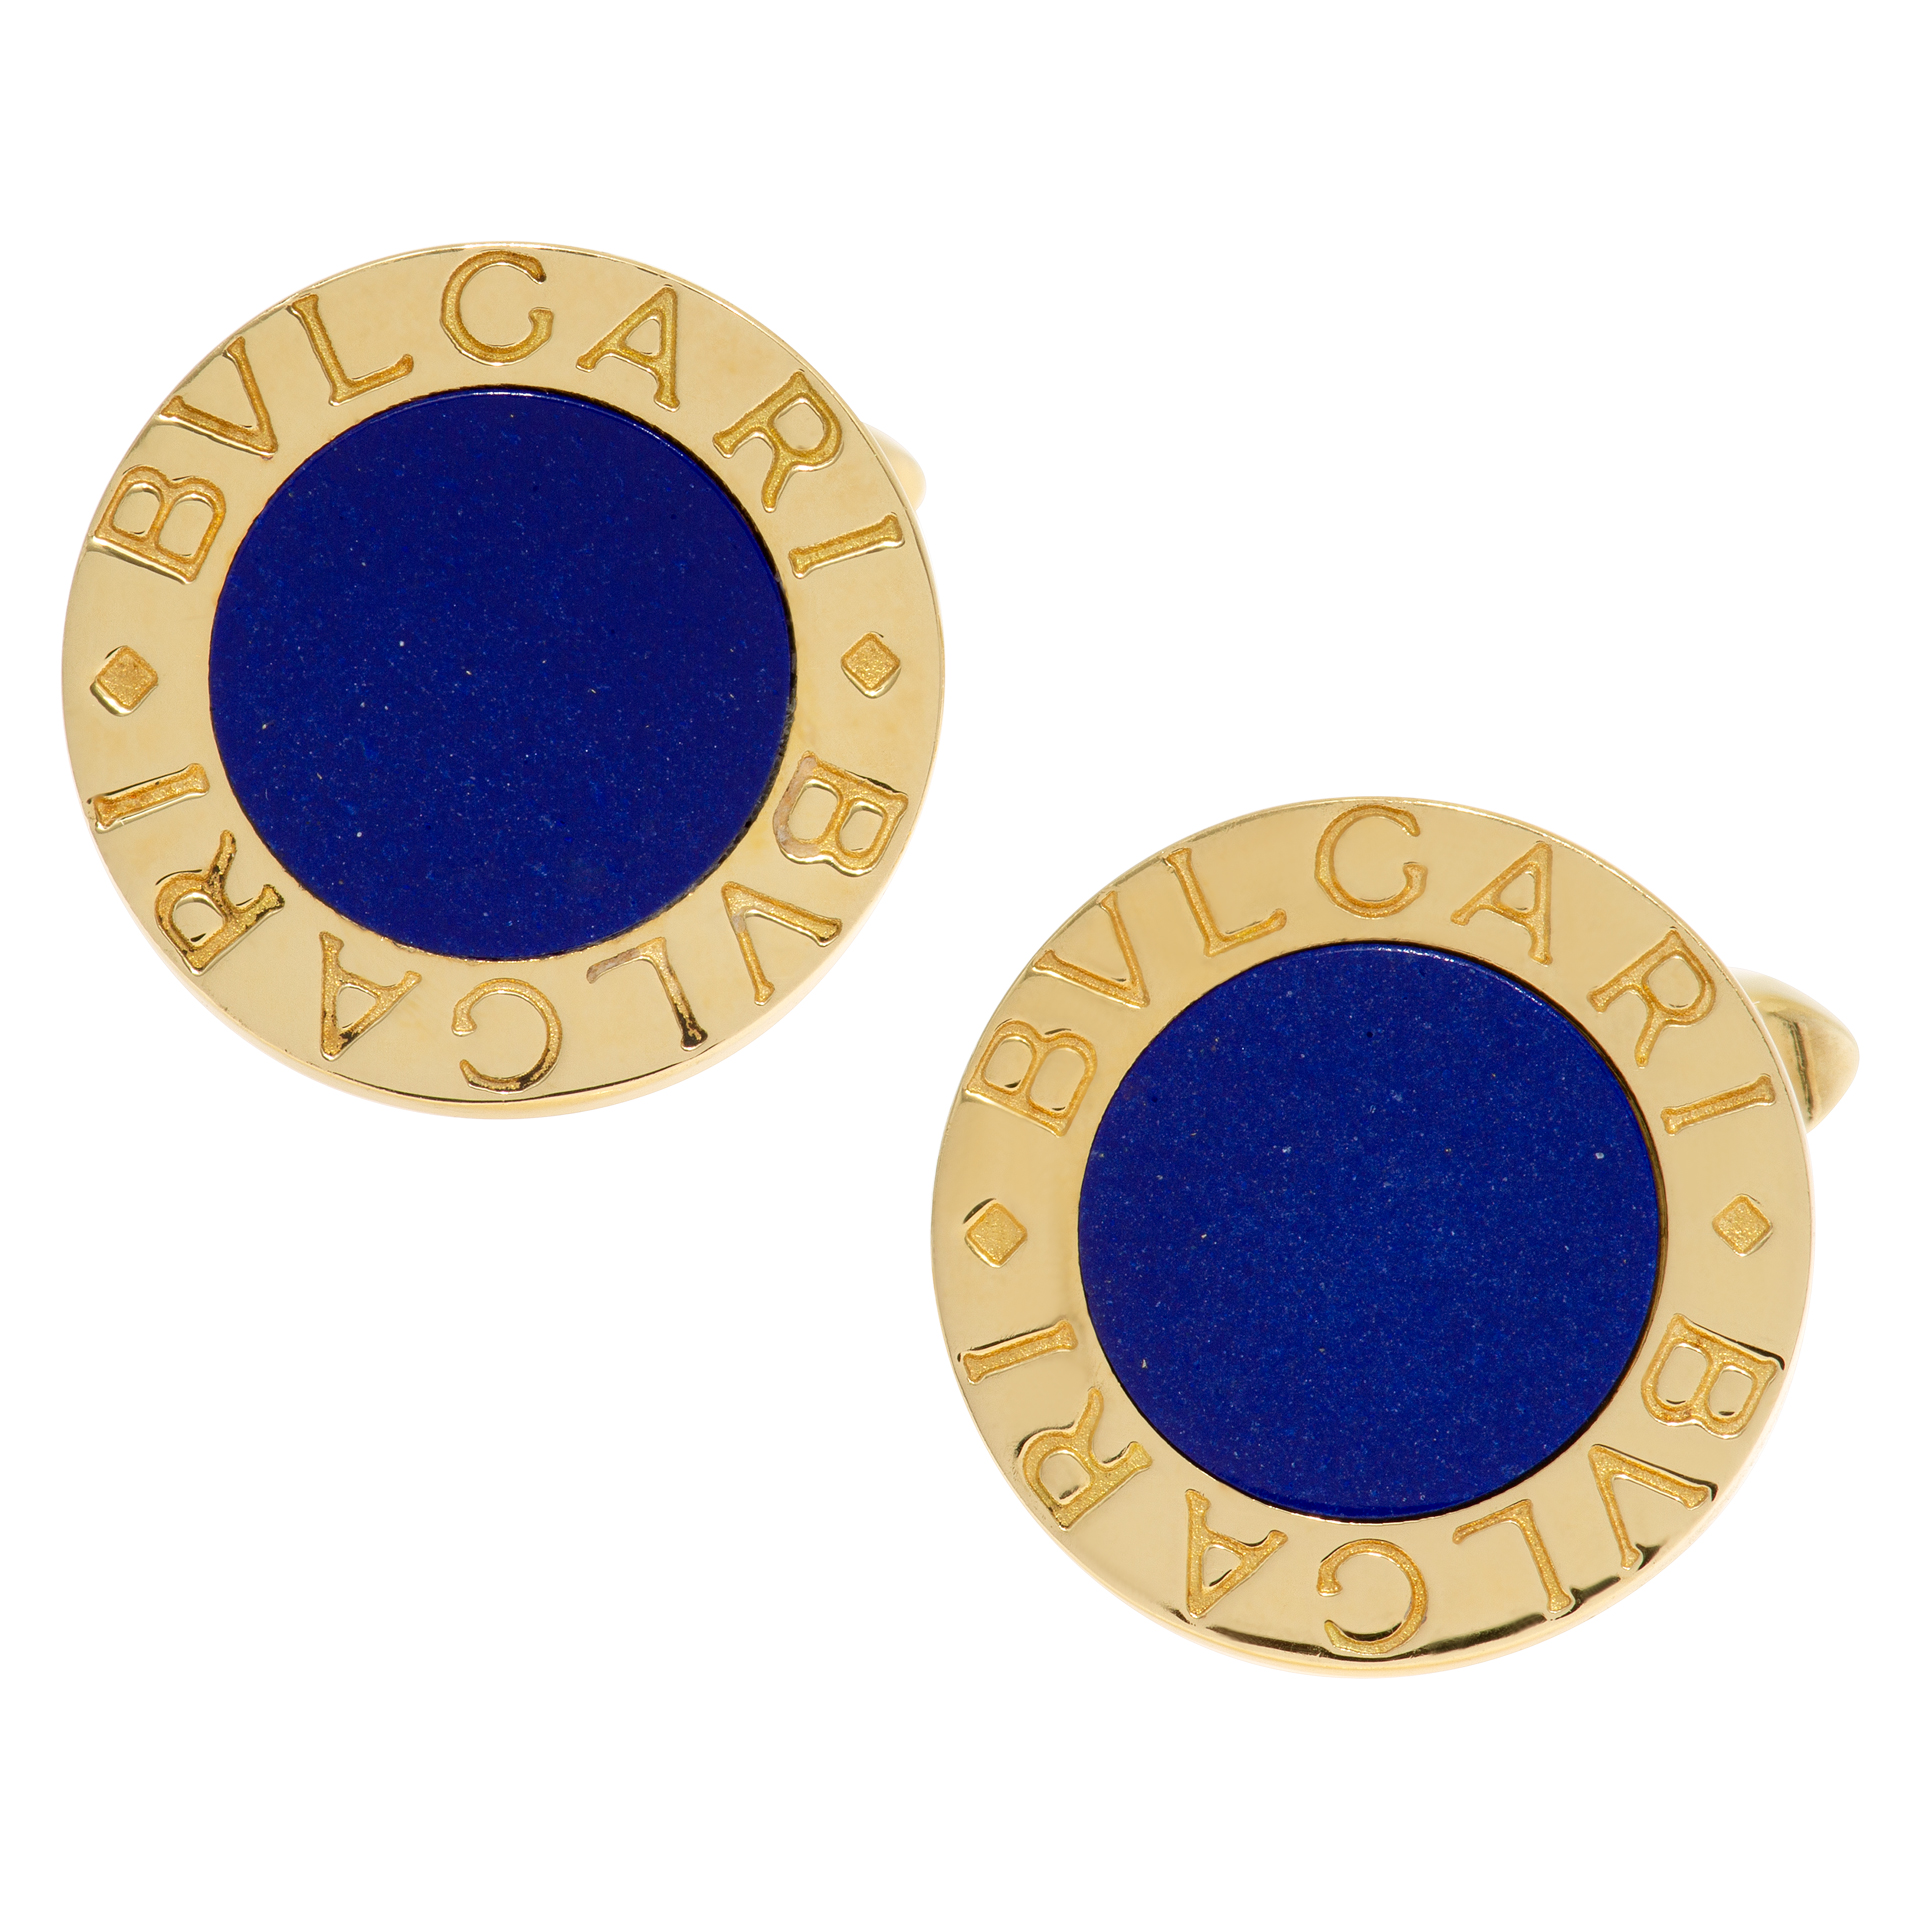 Bvlgari cufflinks in 18k yellow gold with blue lapiz center (Default)